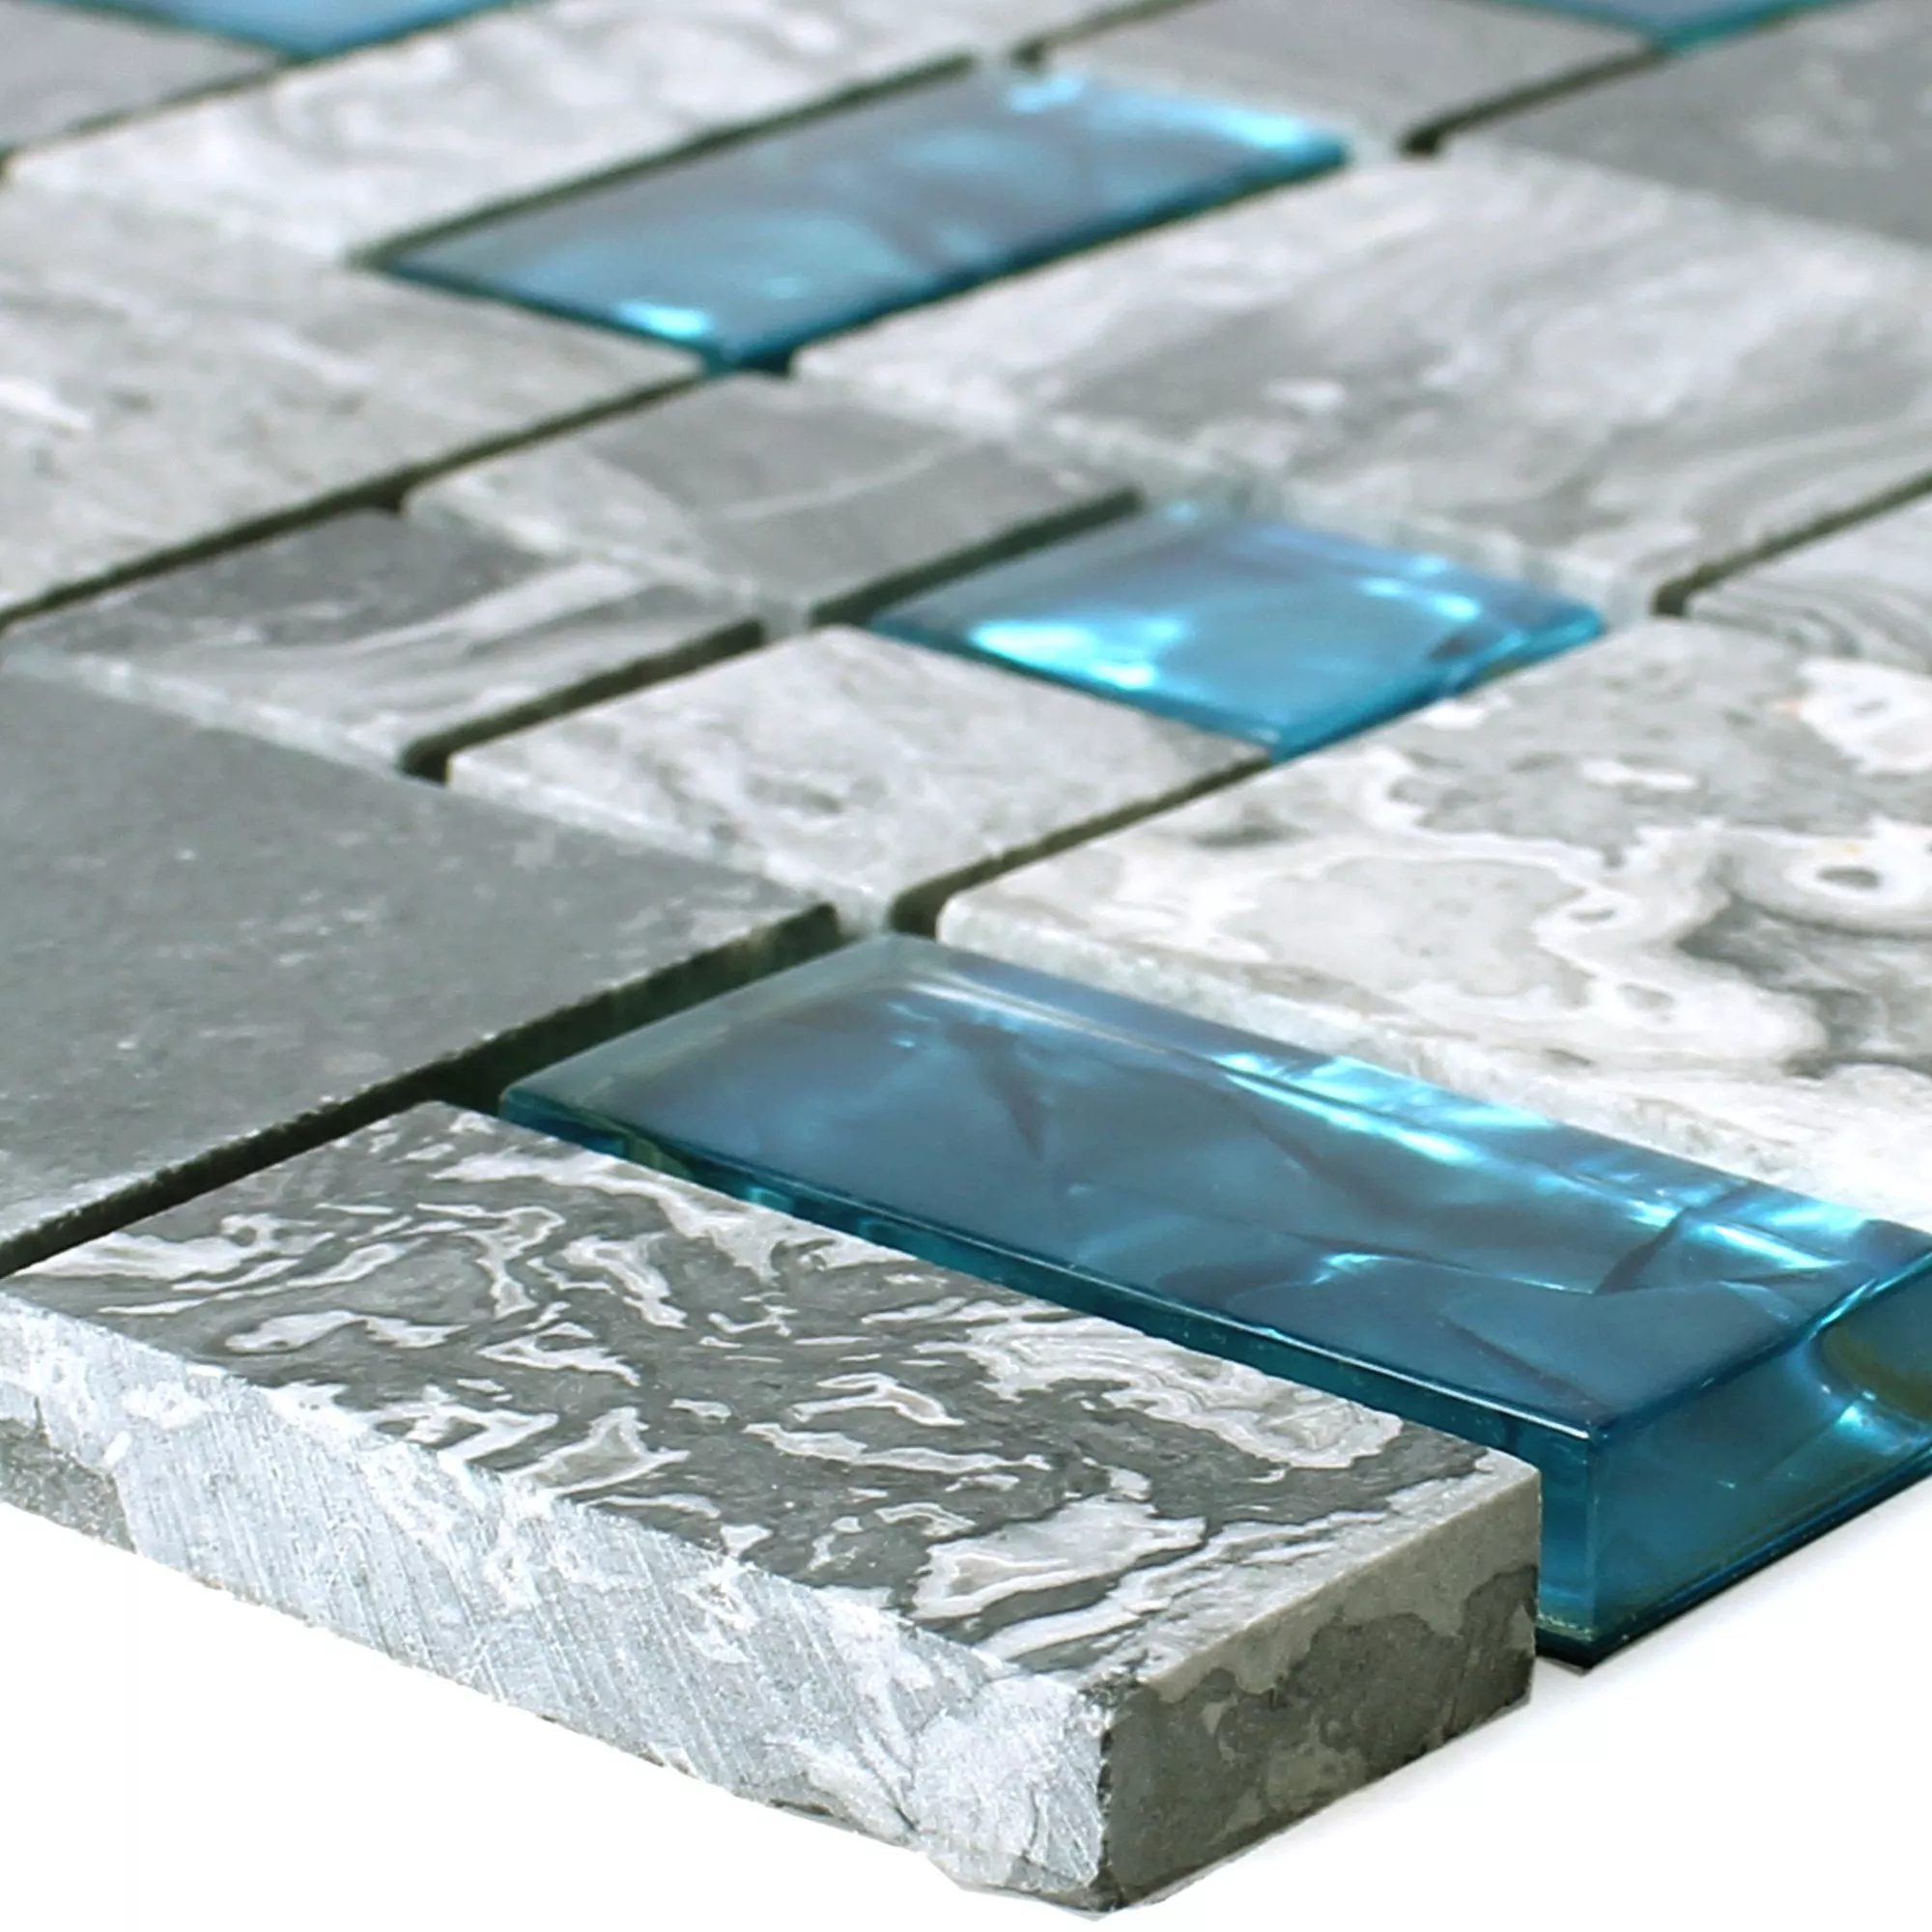 Glass Mosaic Natural Stone Tiles Sinop Grey Blue 2 Mix